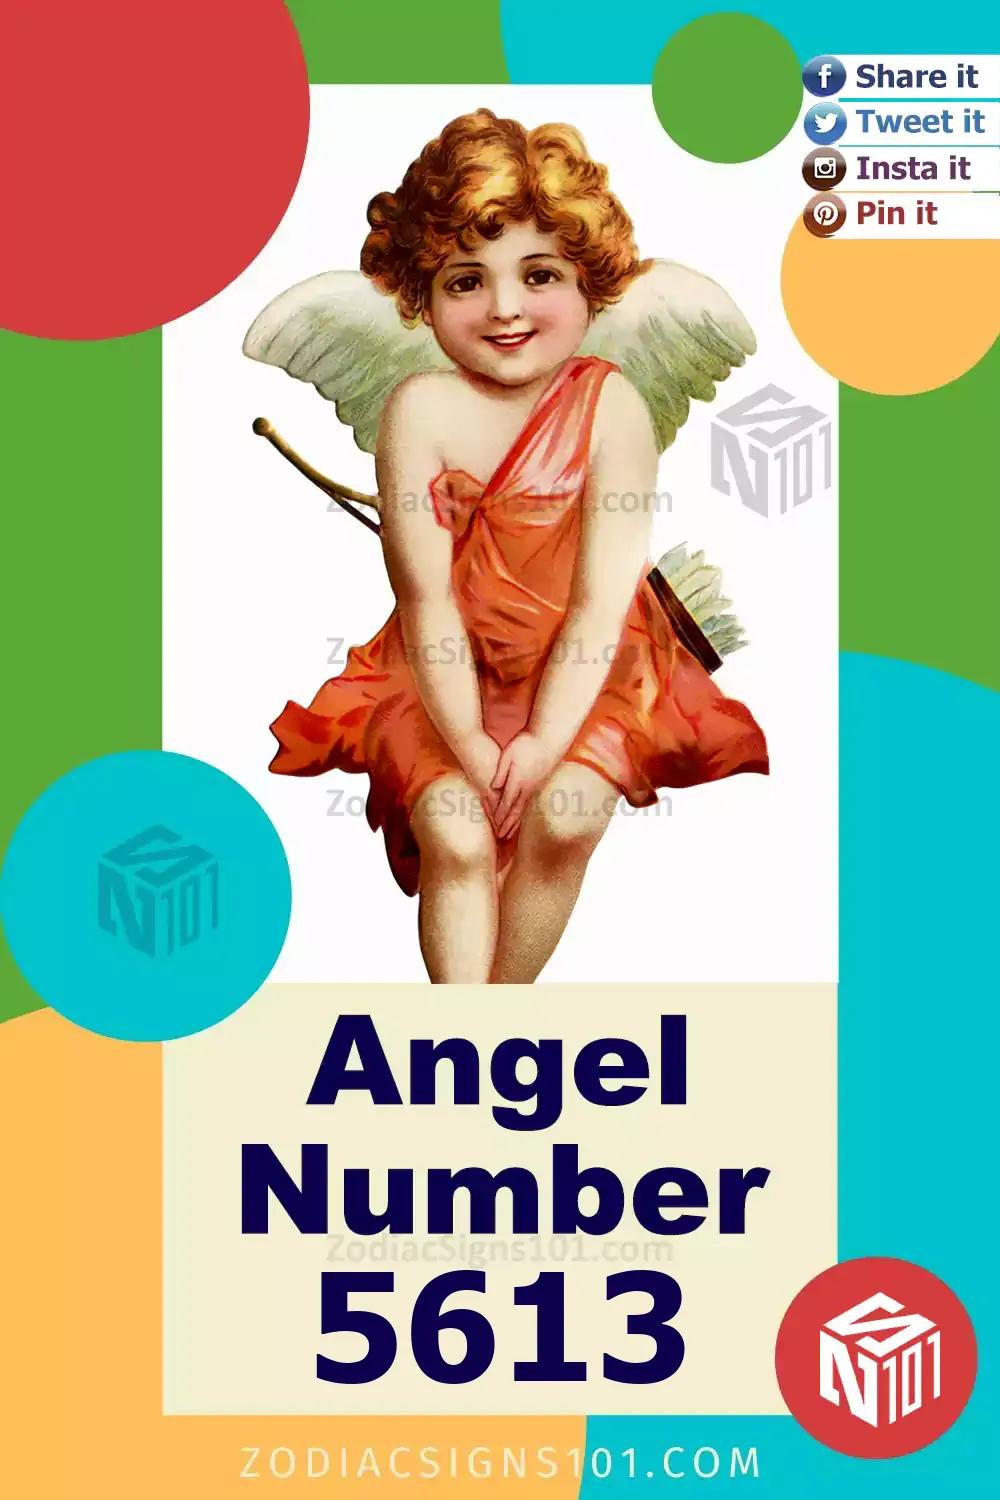 5613-Angel-Number-Meaning.jpg